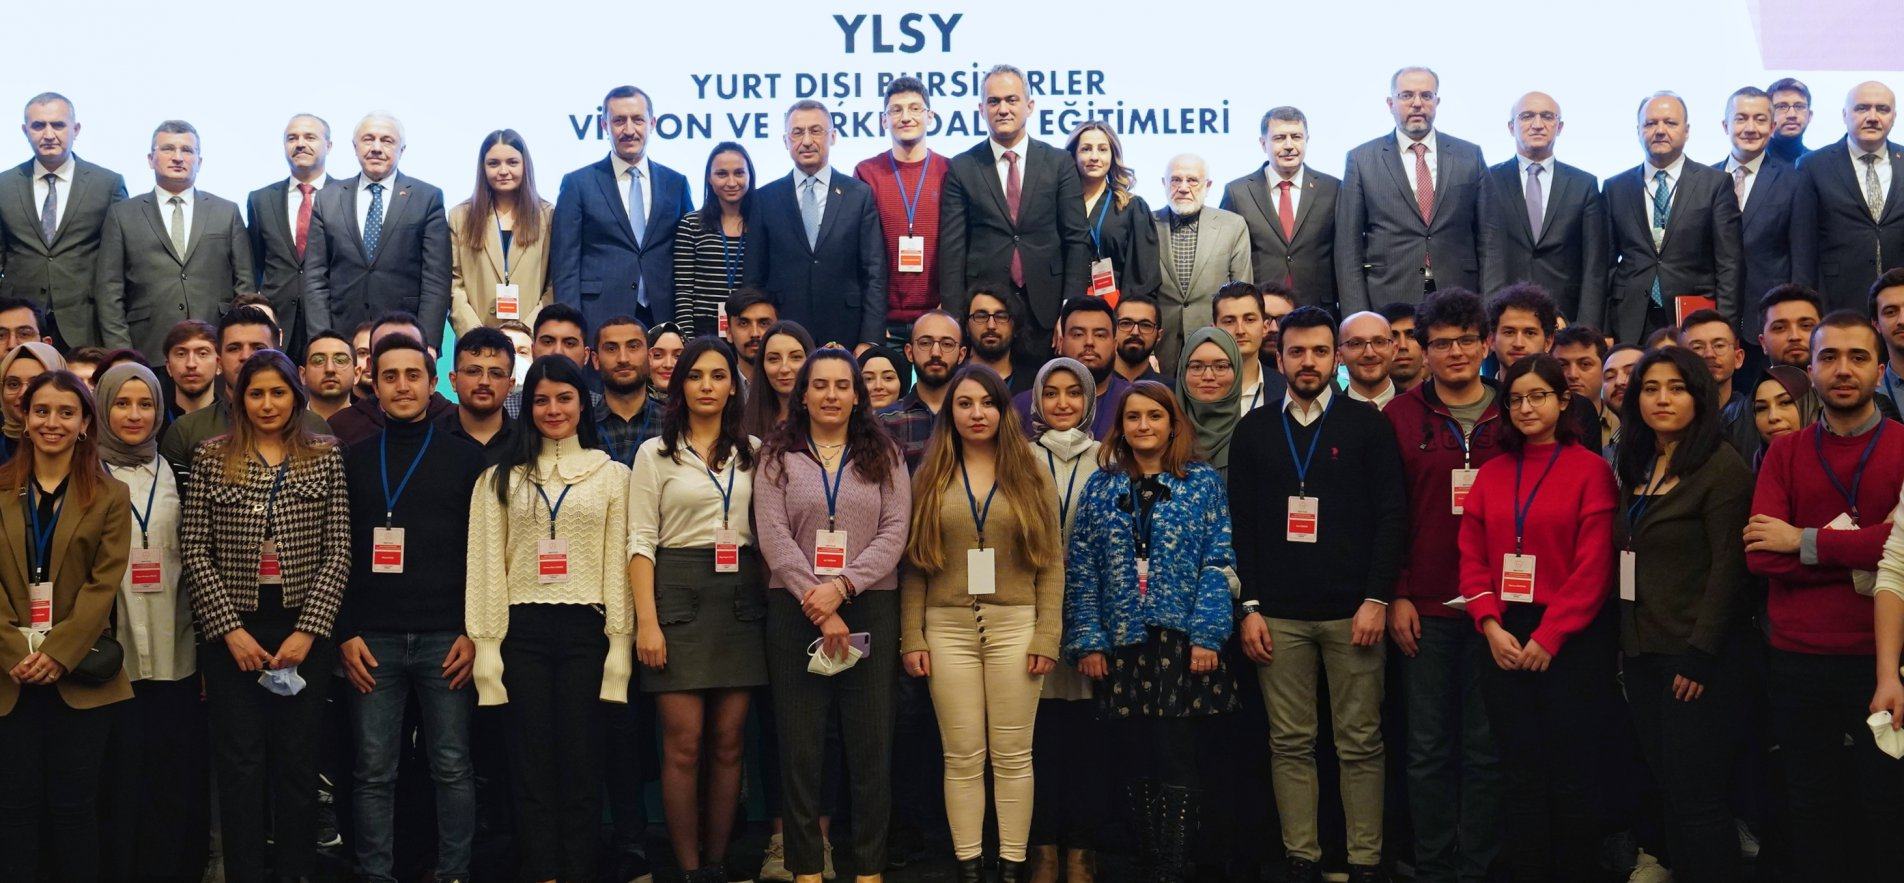 VICE PRESIDENT OKTAY AND MINISTER ÖZER MEET YLSY SCHOLARSHIP STUDENTS